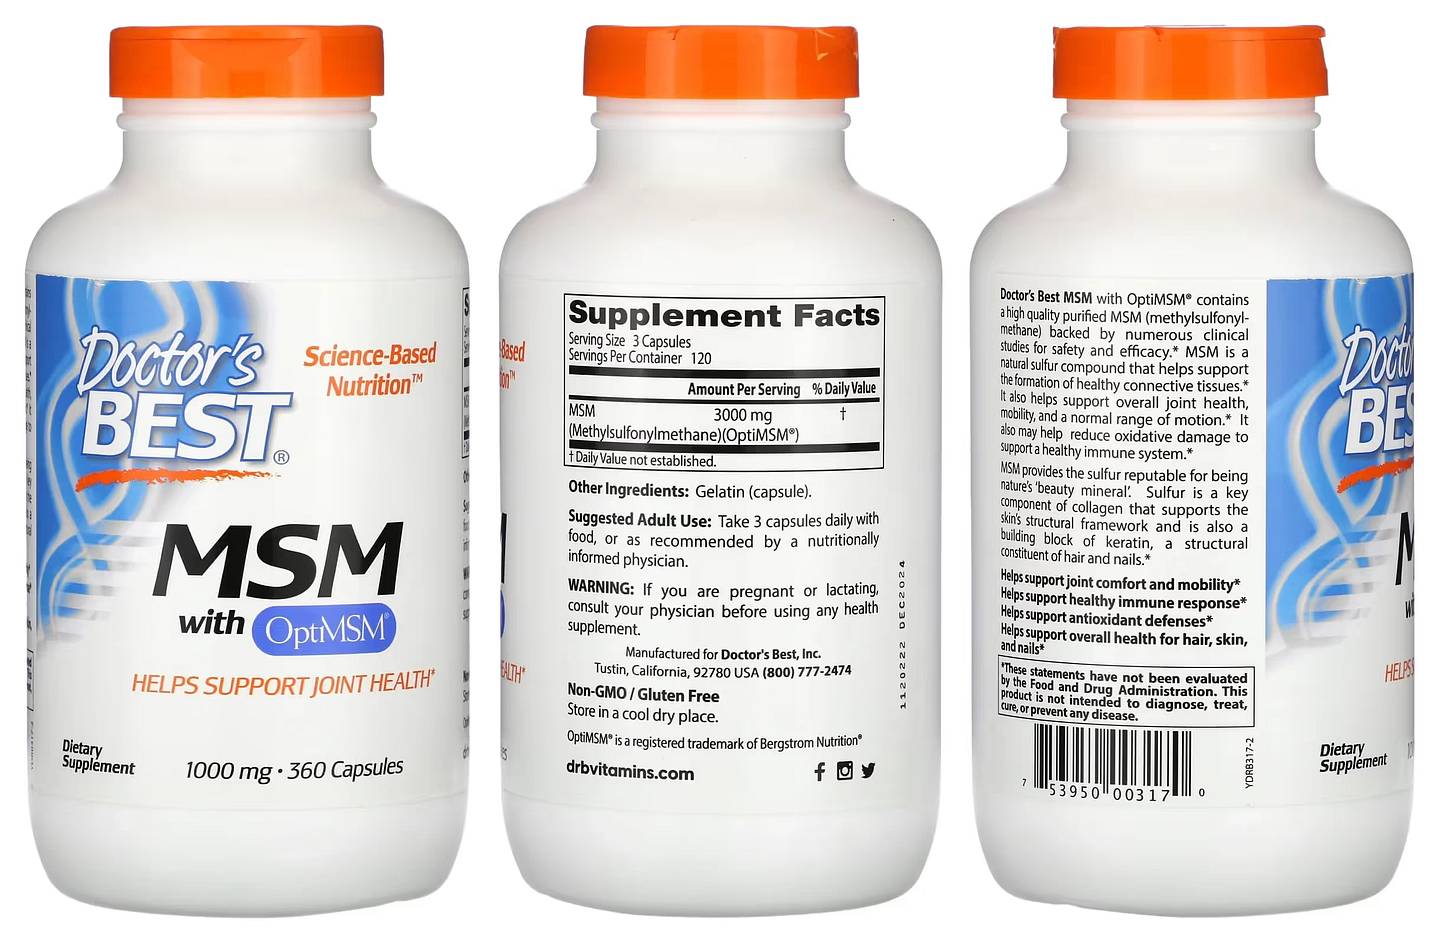 Doctor's Best, MSM with OptiMSM packaging